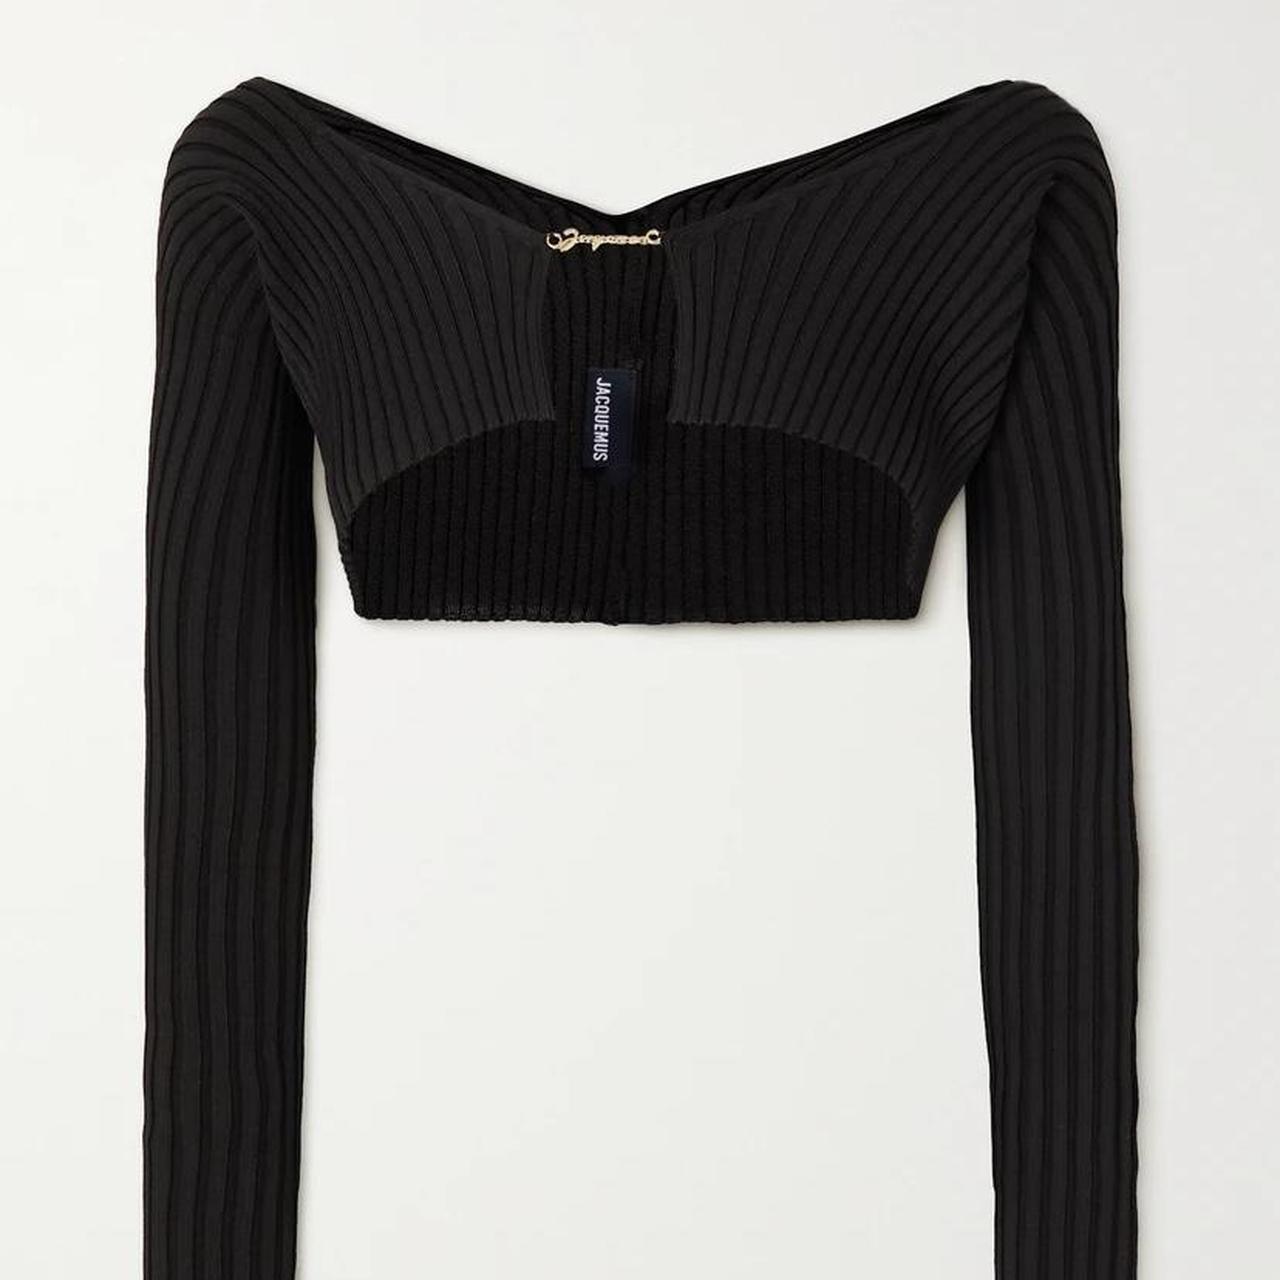 Jacquemus Black Crop Cardigan Size 12 #jacquemus... - Depop